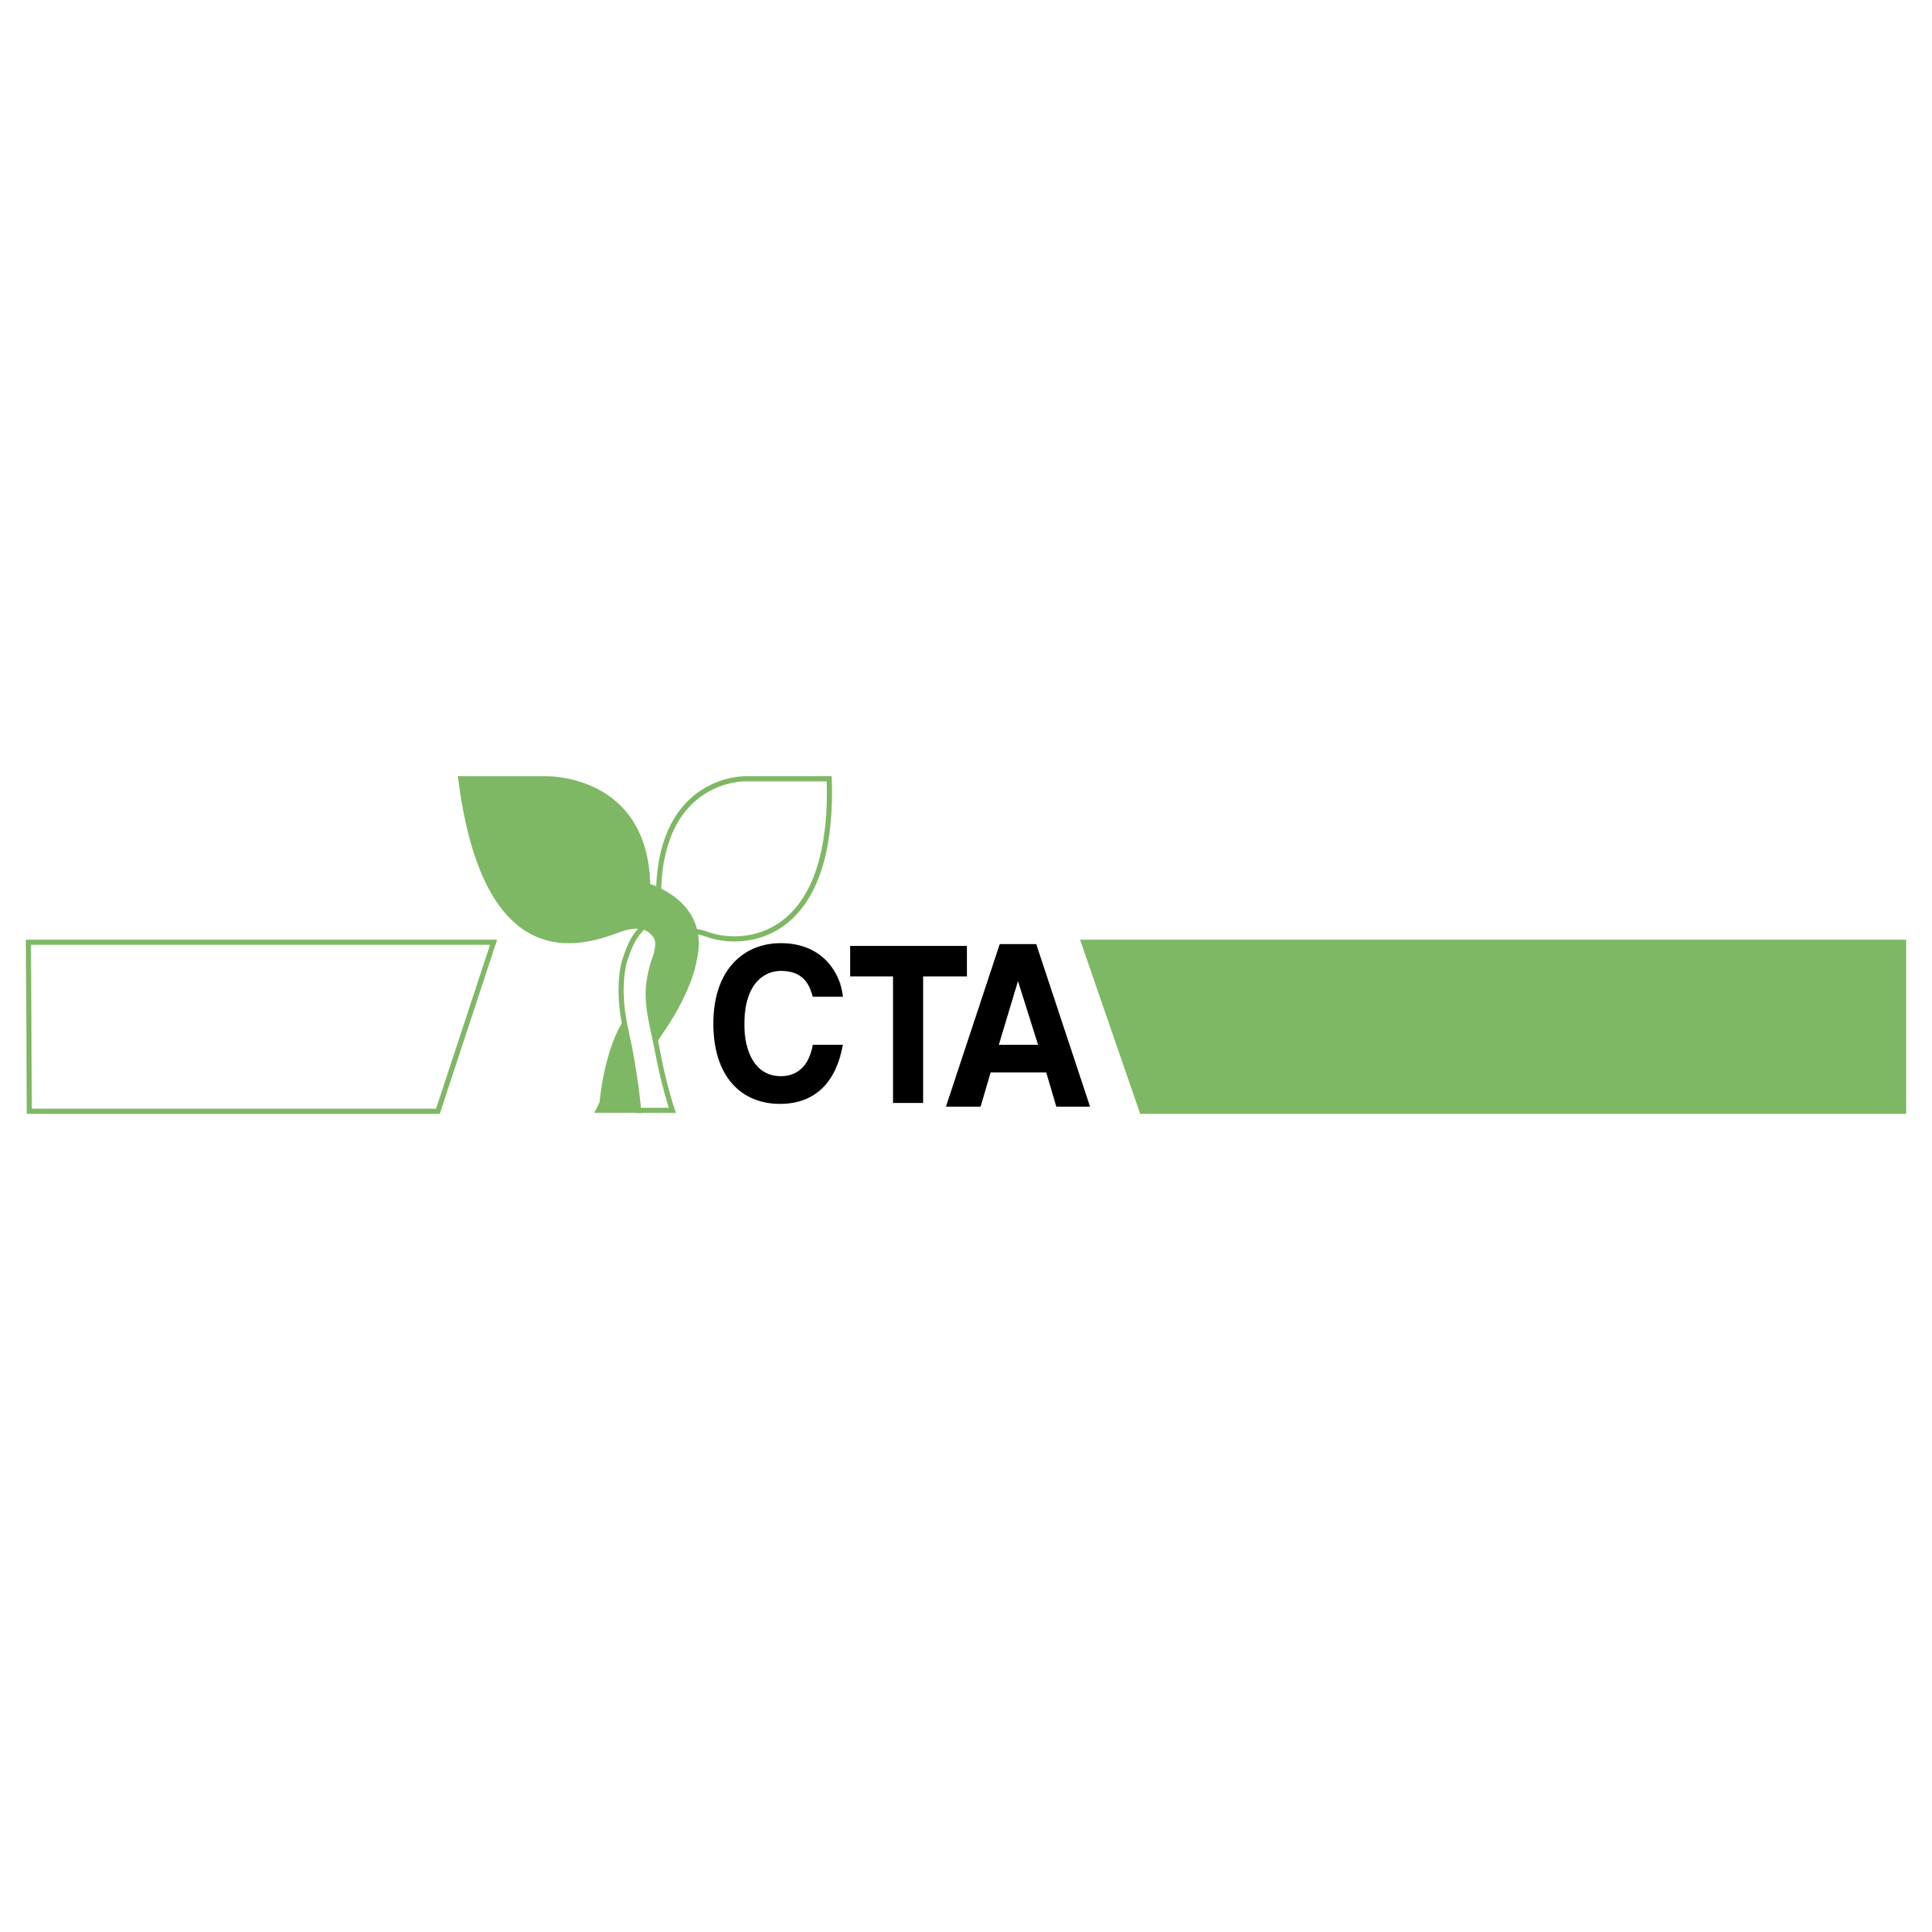 CTA Logo - CTA Logo PNG Transparent & SVG Vector - Freebie Supply